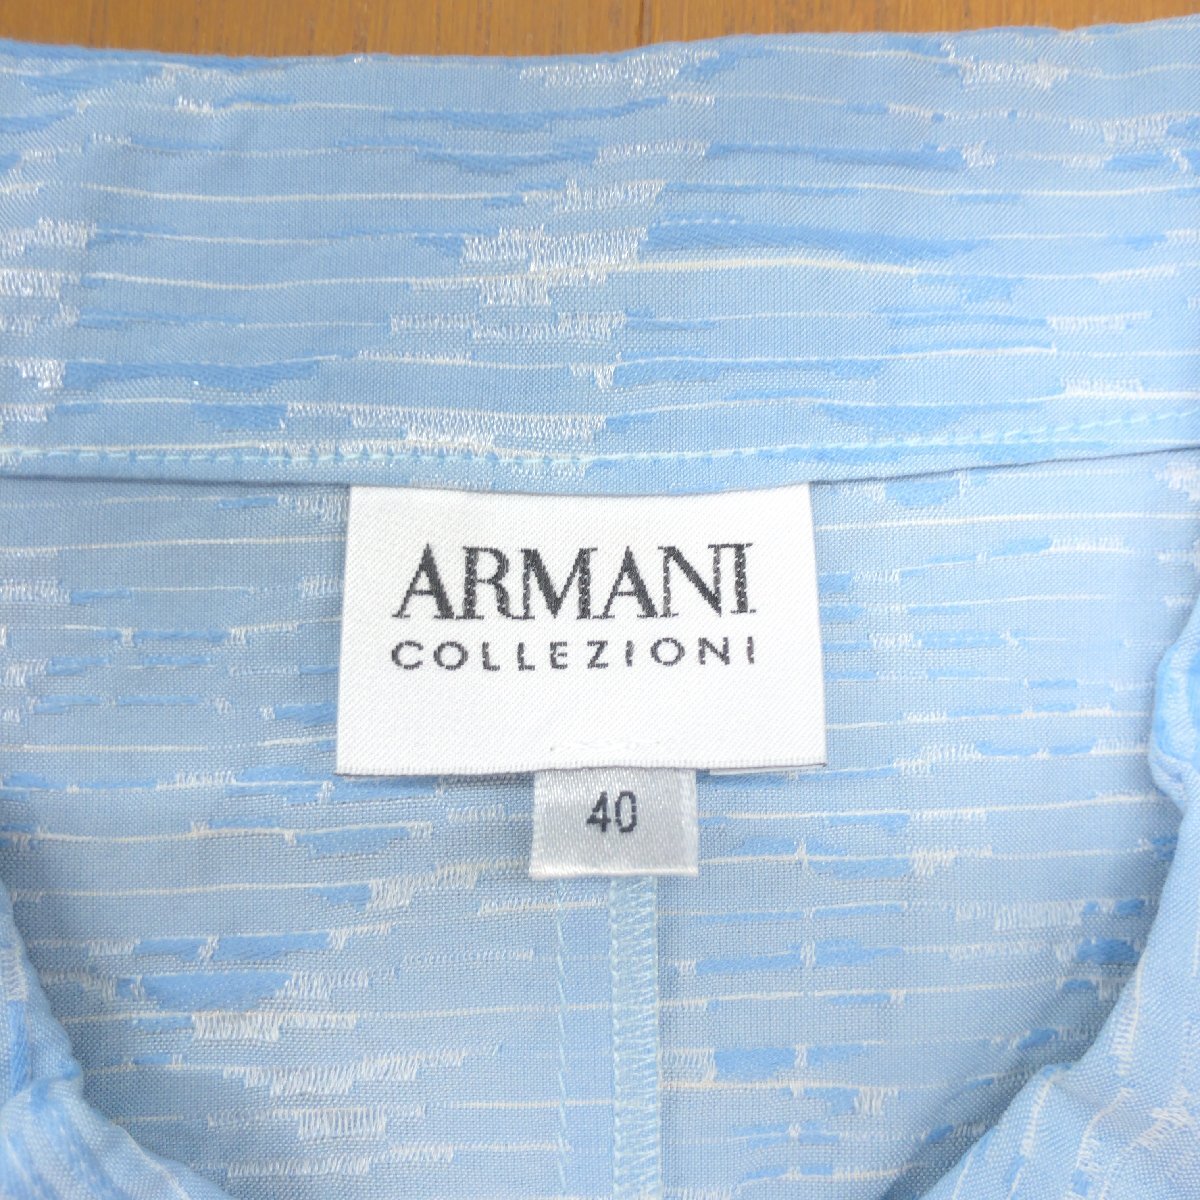 ARMANI COLLEZIONI アルマーニコレツィオーニ シルクブレンド オープンネック プリーツデザイン シャツ 40 ライトブルー 七分袖 ブラウス_画像3